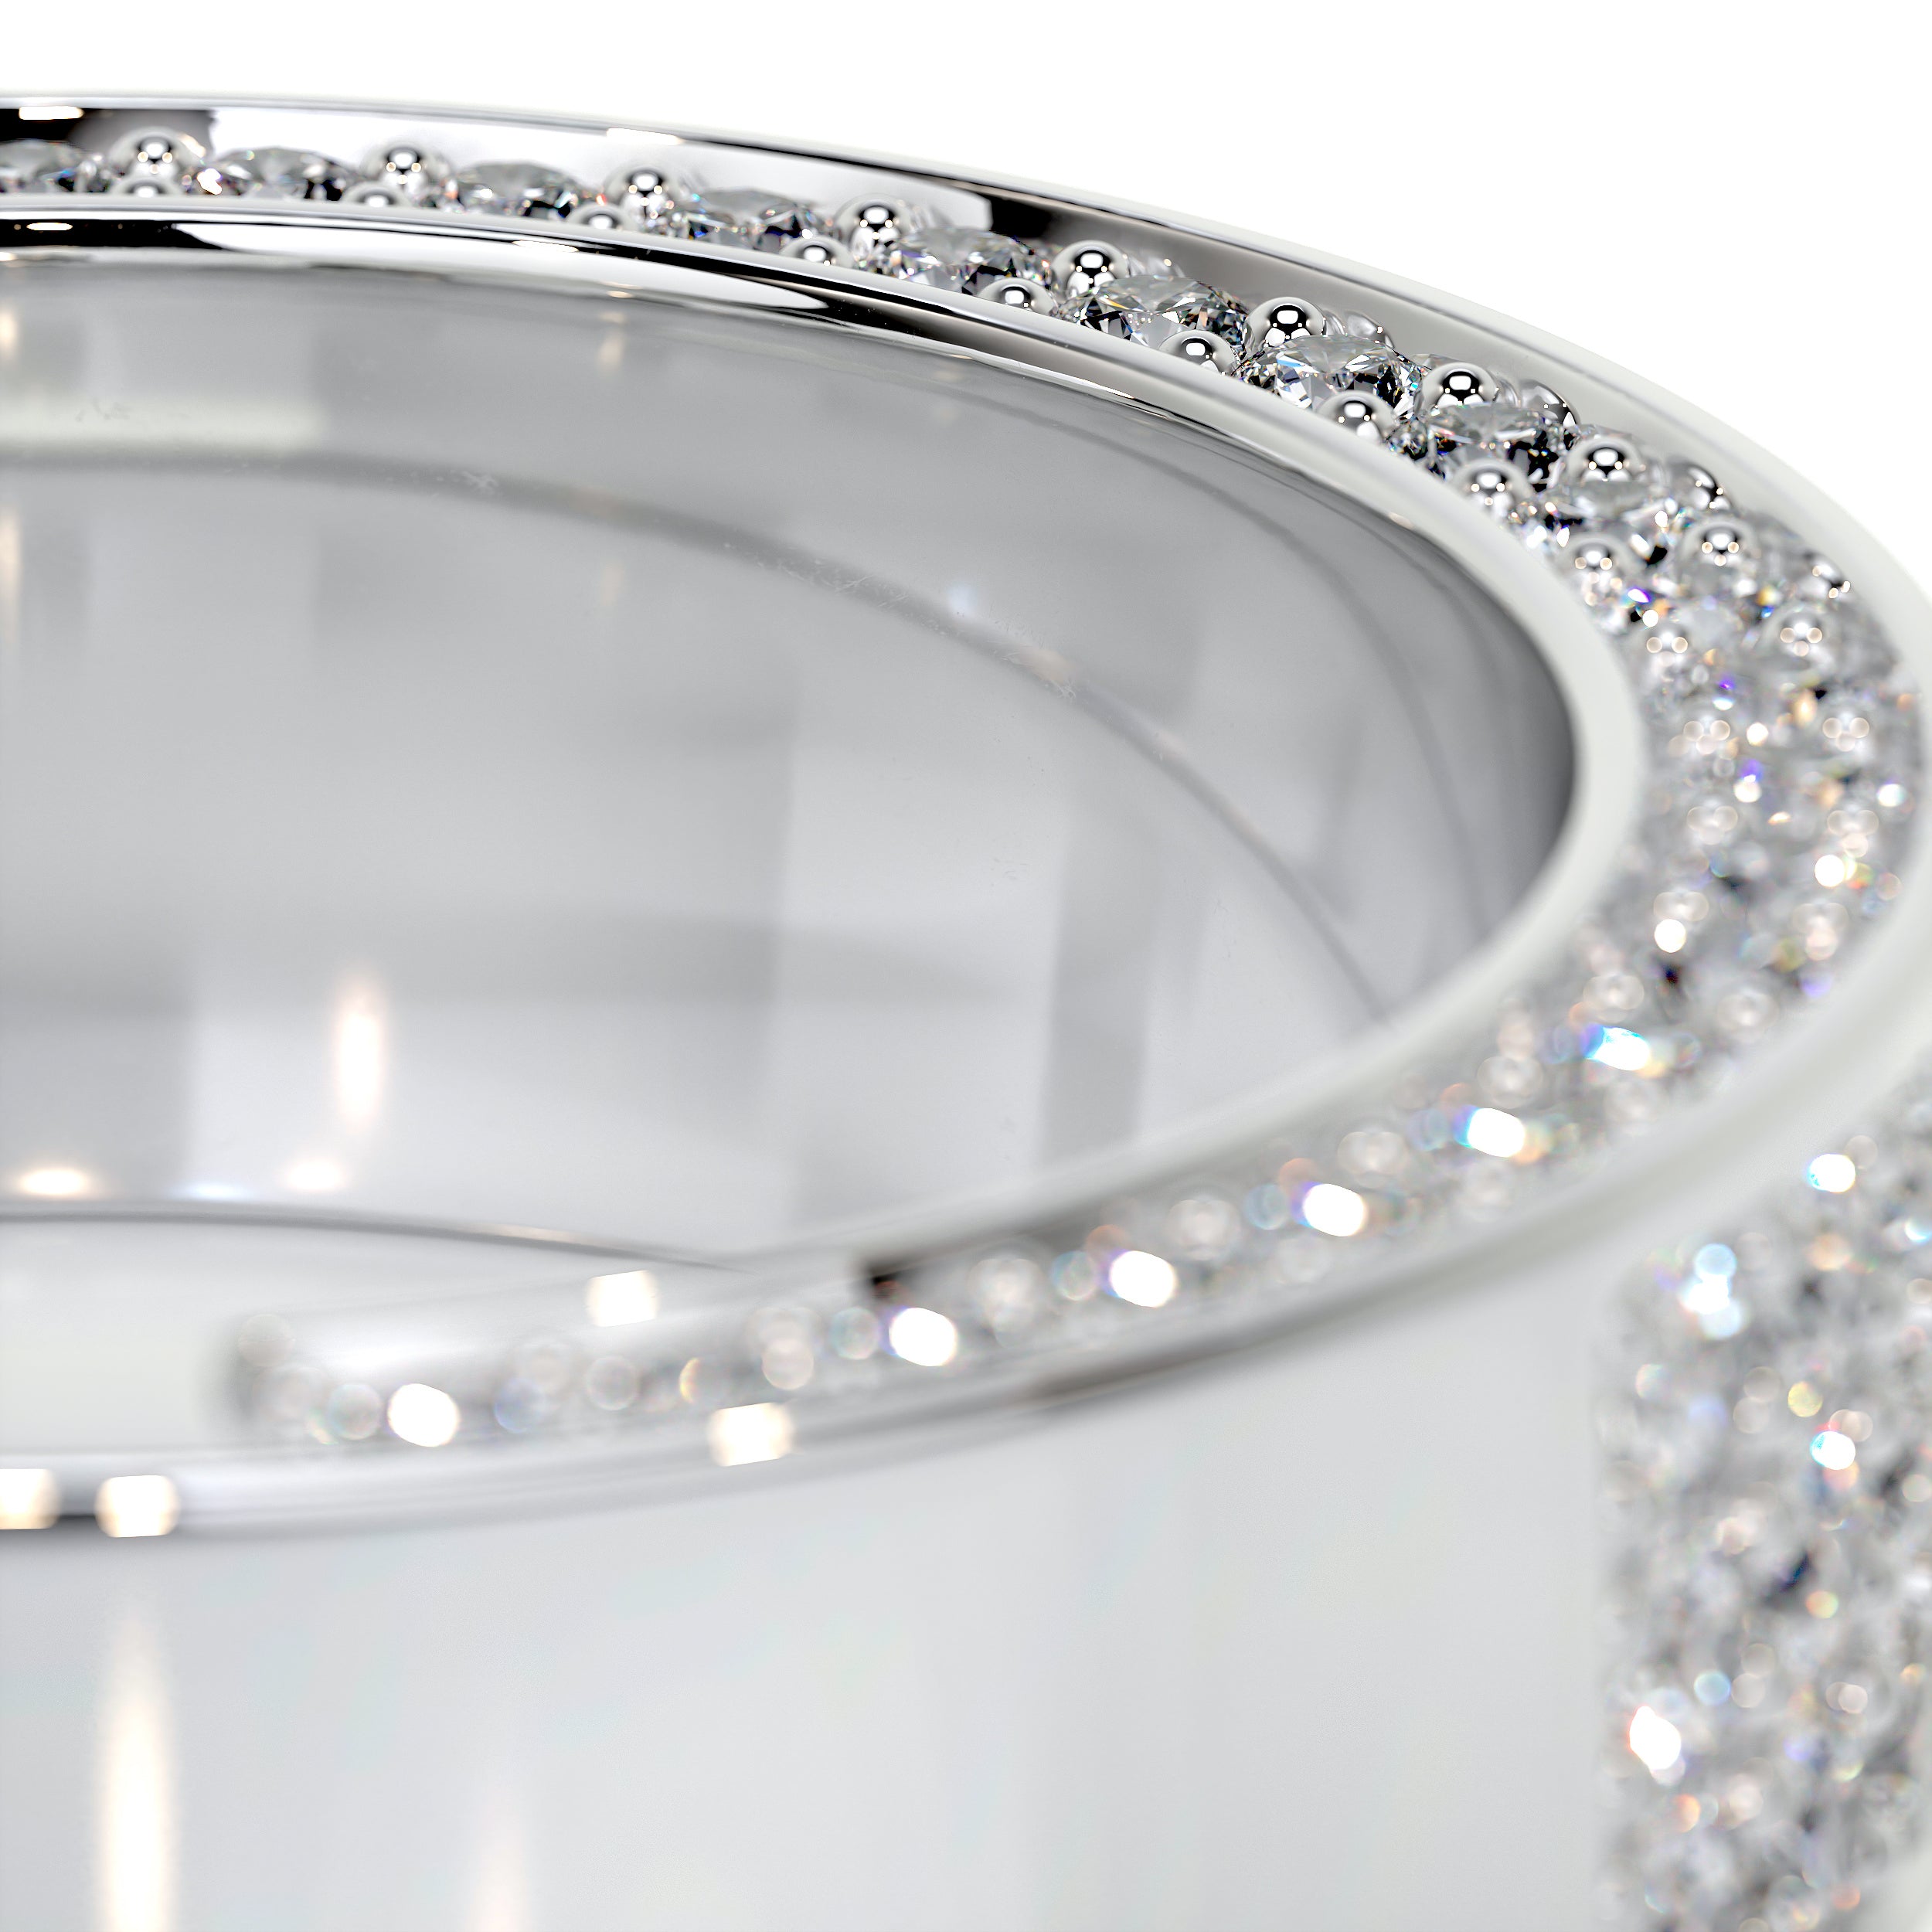 Vera Diamond Wedding Ring   (1.3 Carat) -18K White Gold